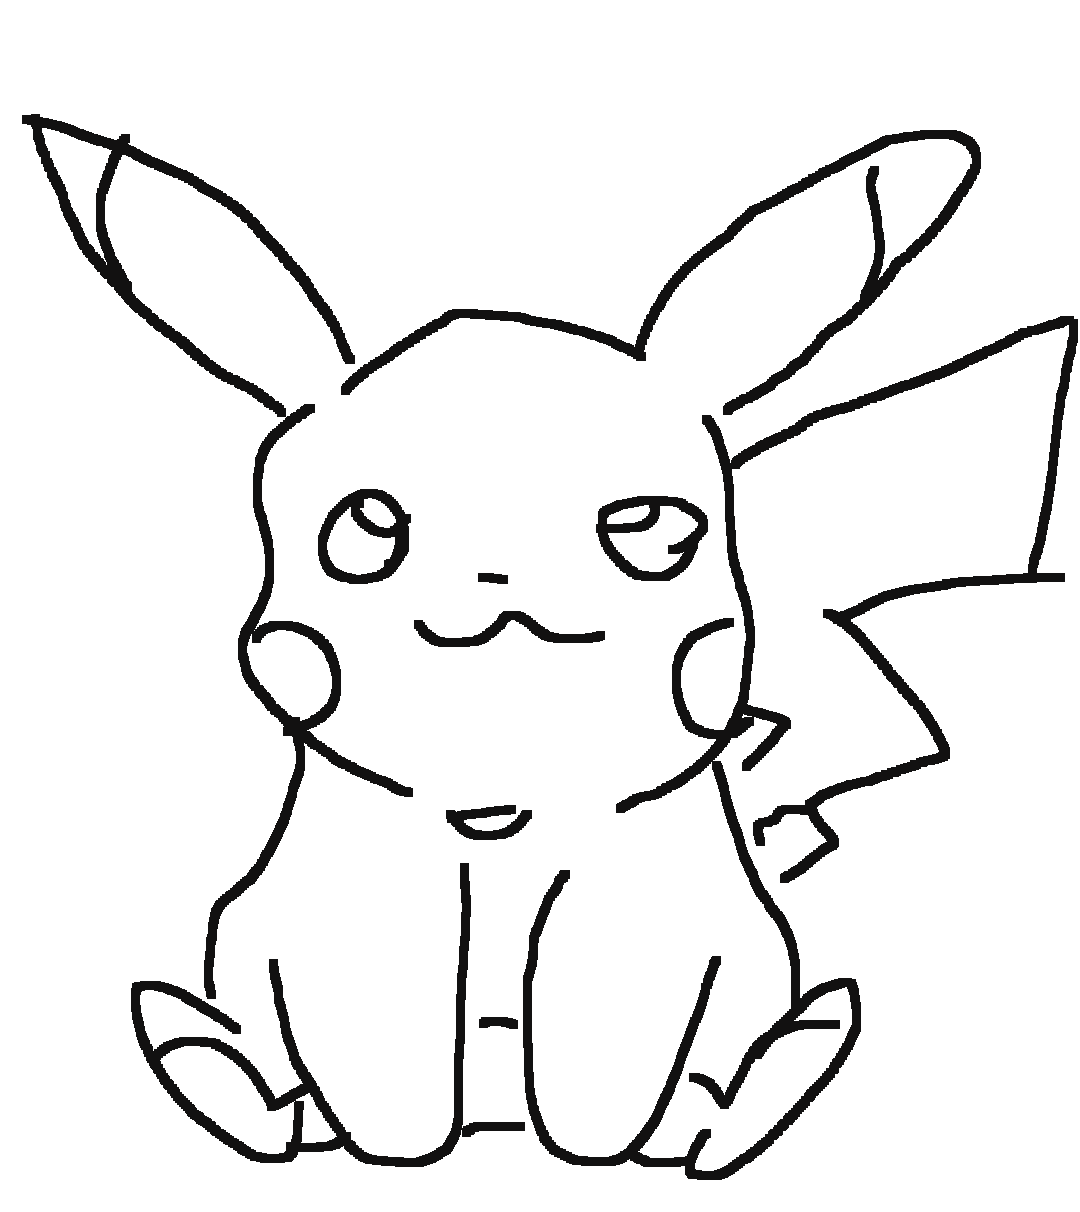 All The Pikachu! #pokemon #pikachu #anime #drawing #art 